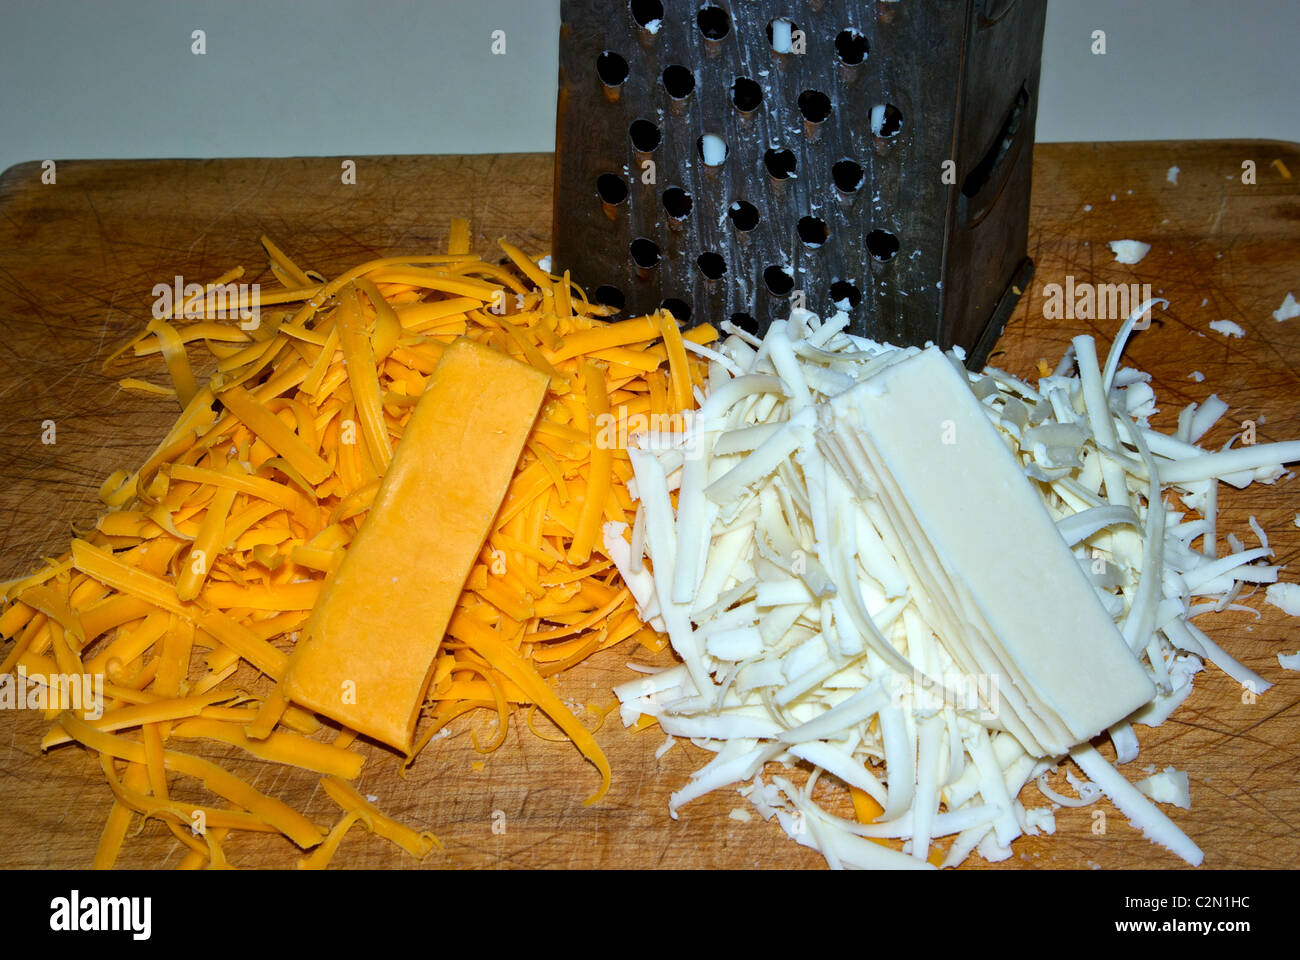 https://c8.alamy.com/comp/C2N1HC/grater-grated-cheddar-mozarella-cheeses-wooden-cutting-board-C2N1HC.jpg